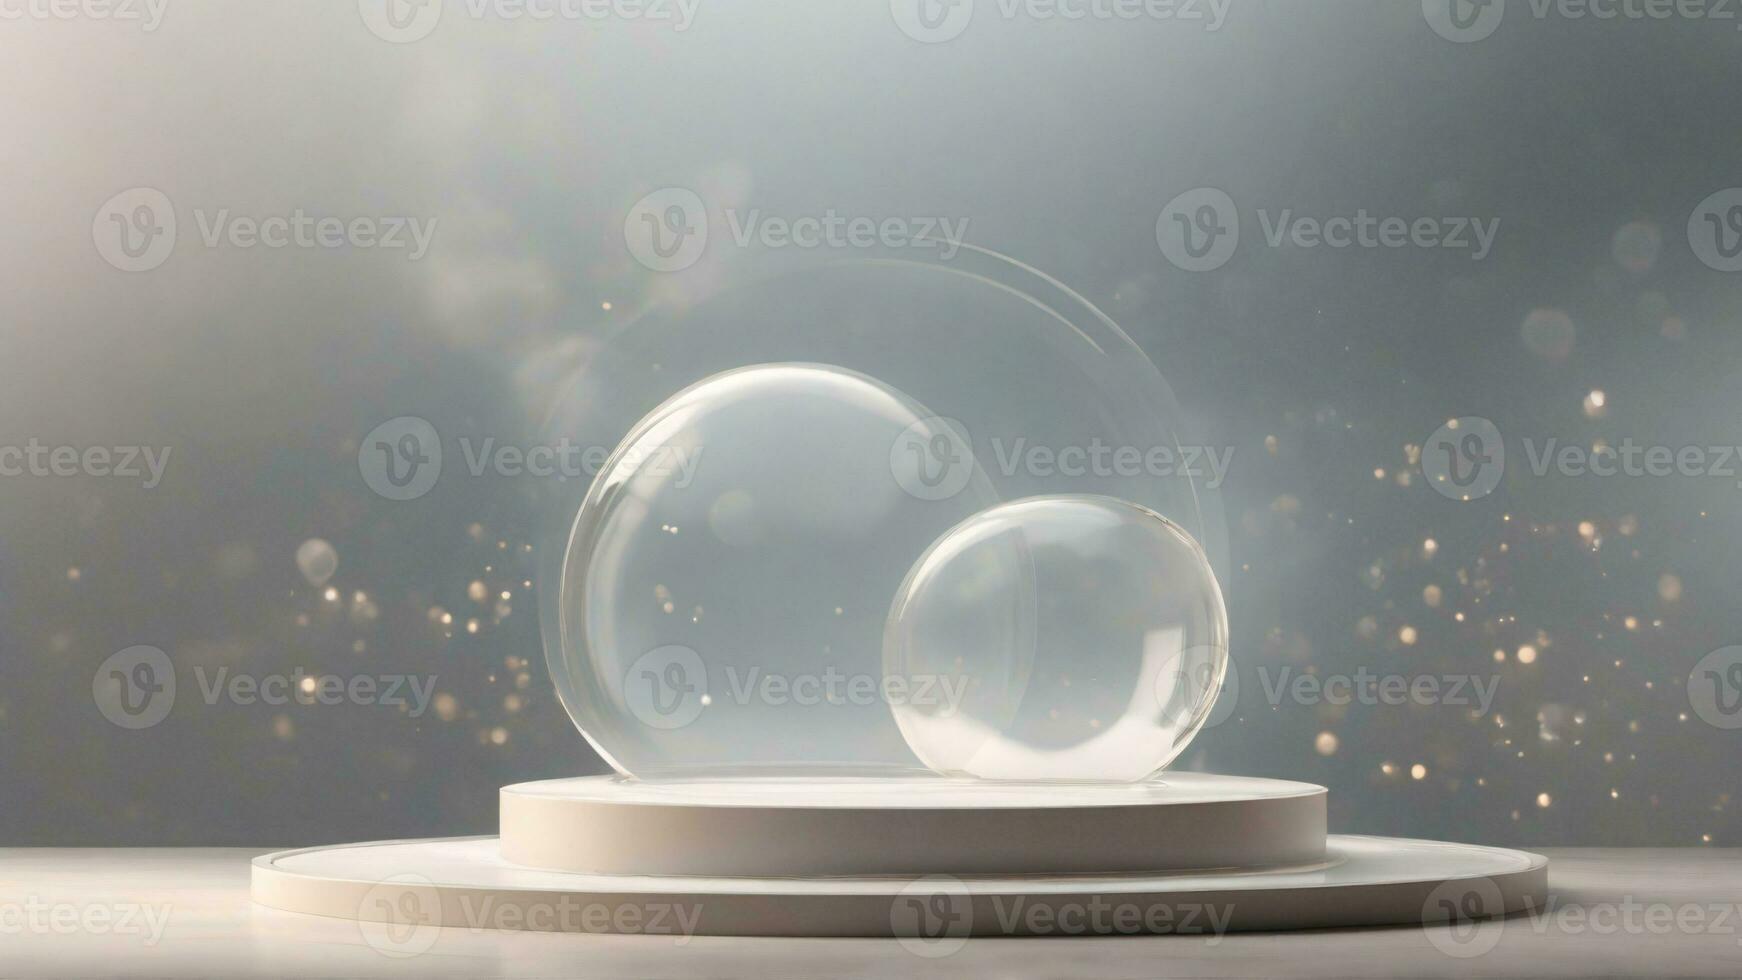 ai generado 3d hacer de un cristal burbuja pelota en un blanco podio con bokeh antecedentes foto